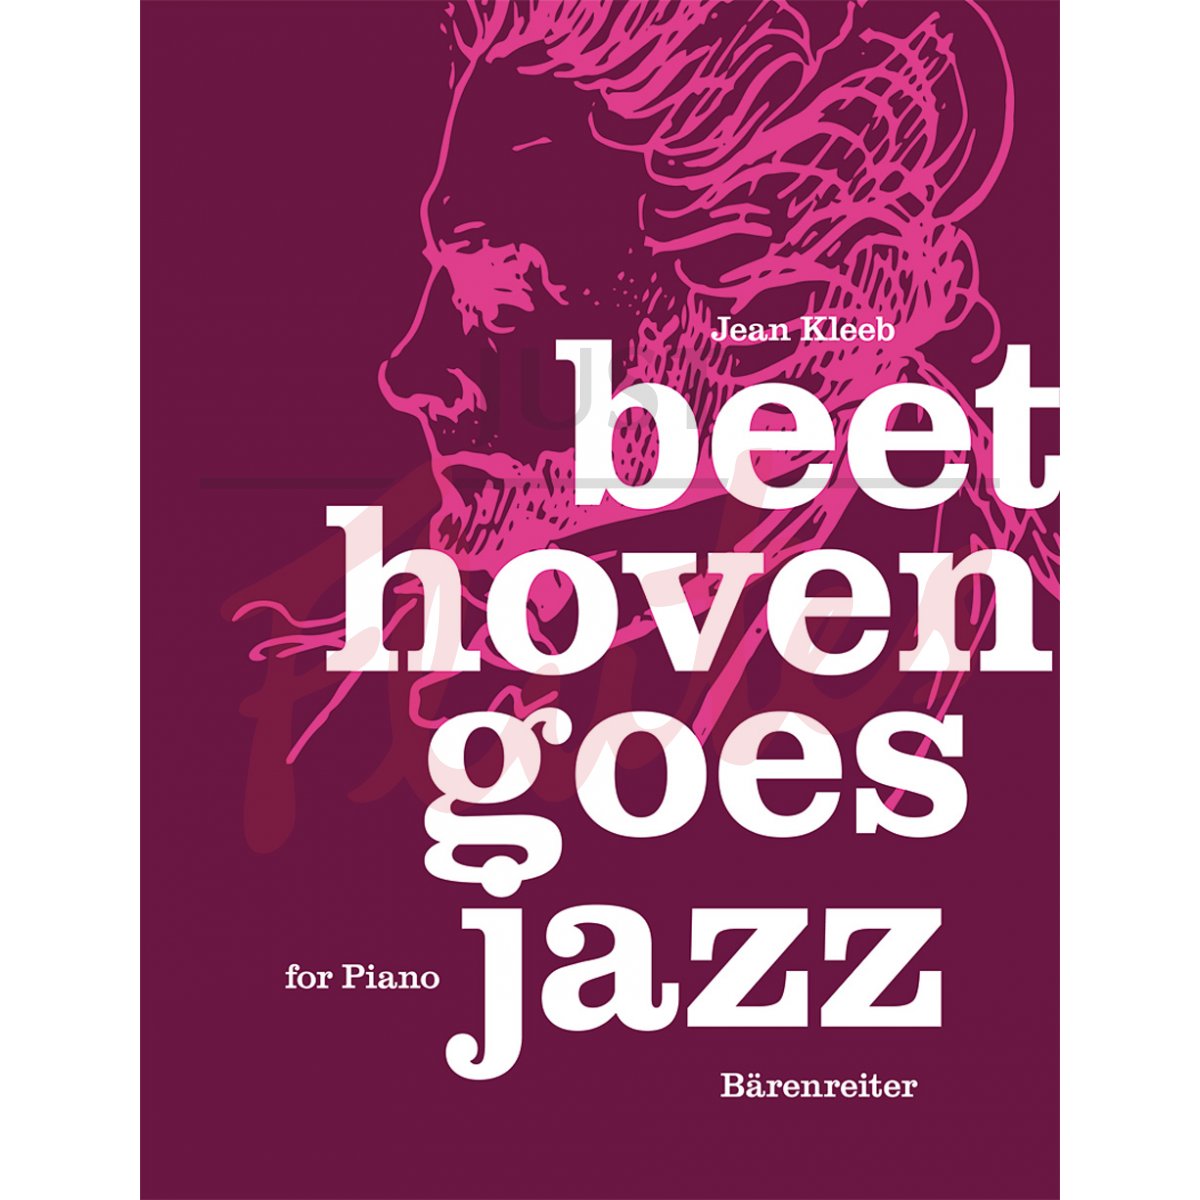 Beethoven Goes Jazz [Piano]